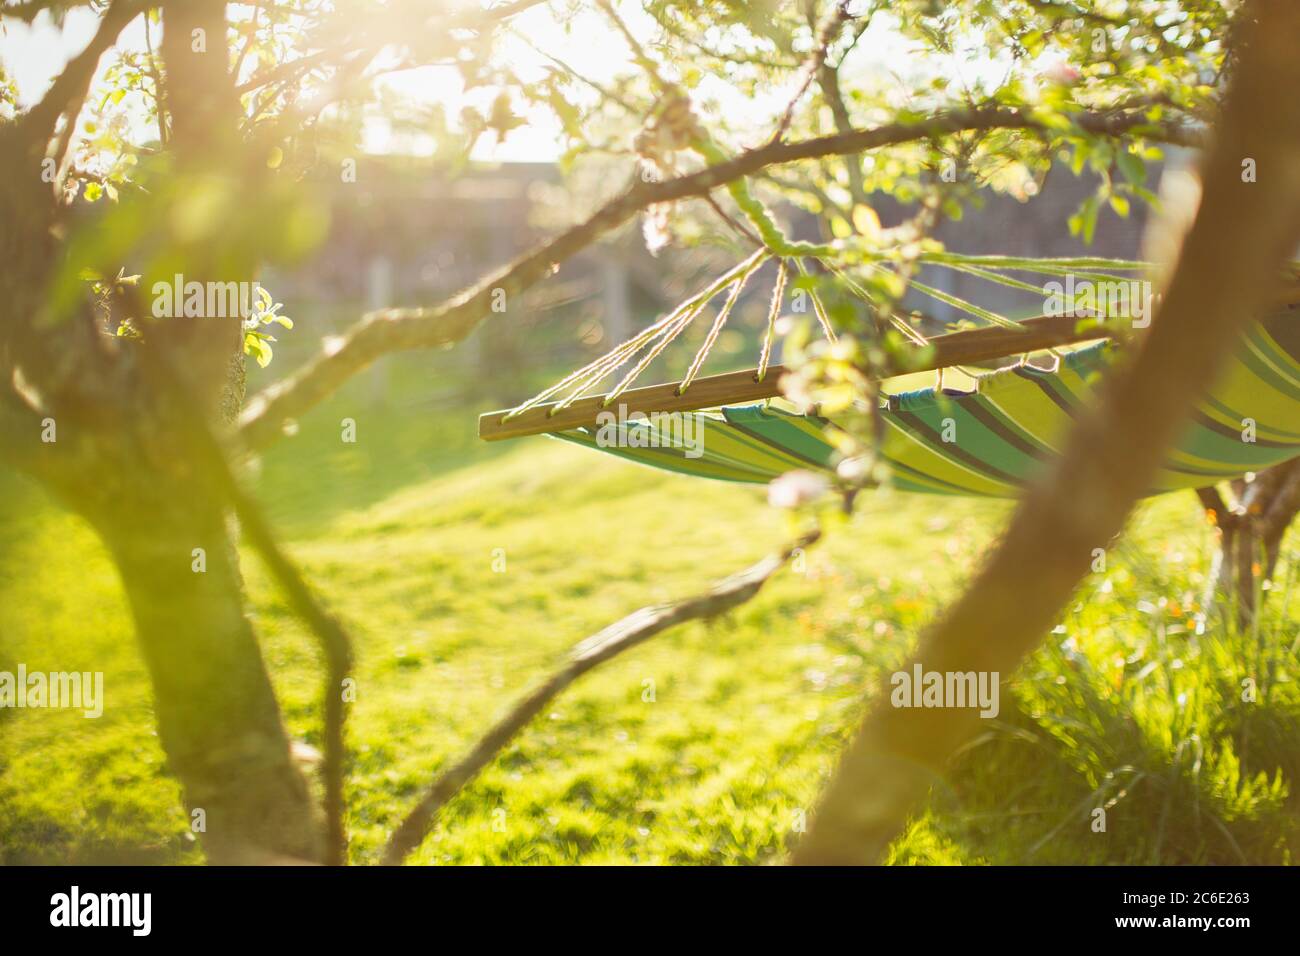 Hammock hanging in sunny tranquil garden Stock Photo